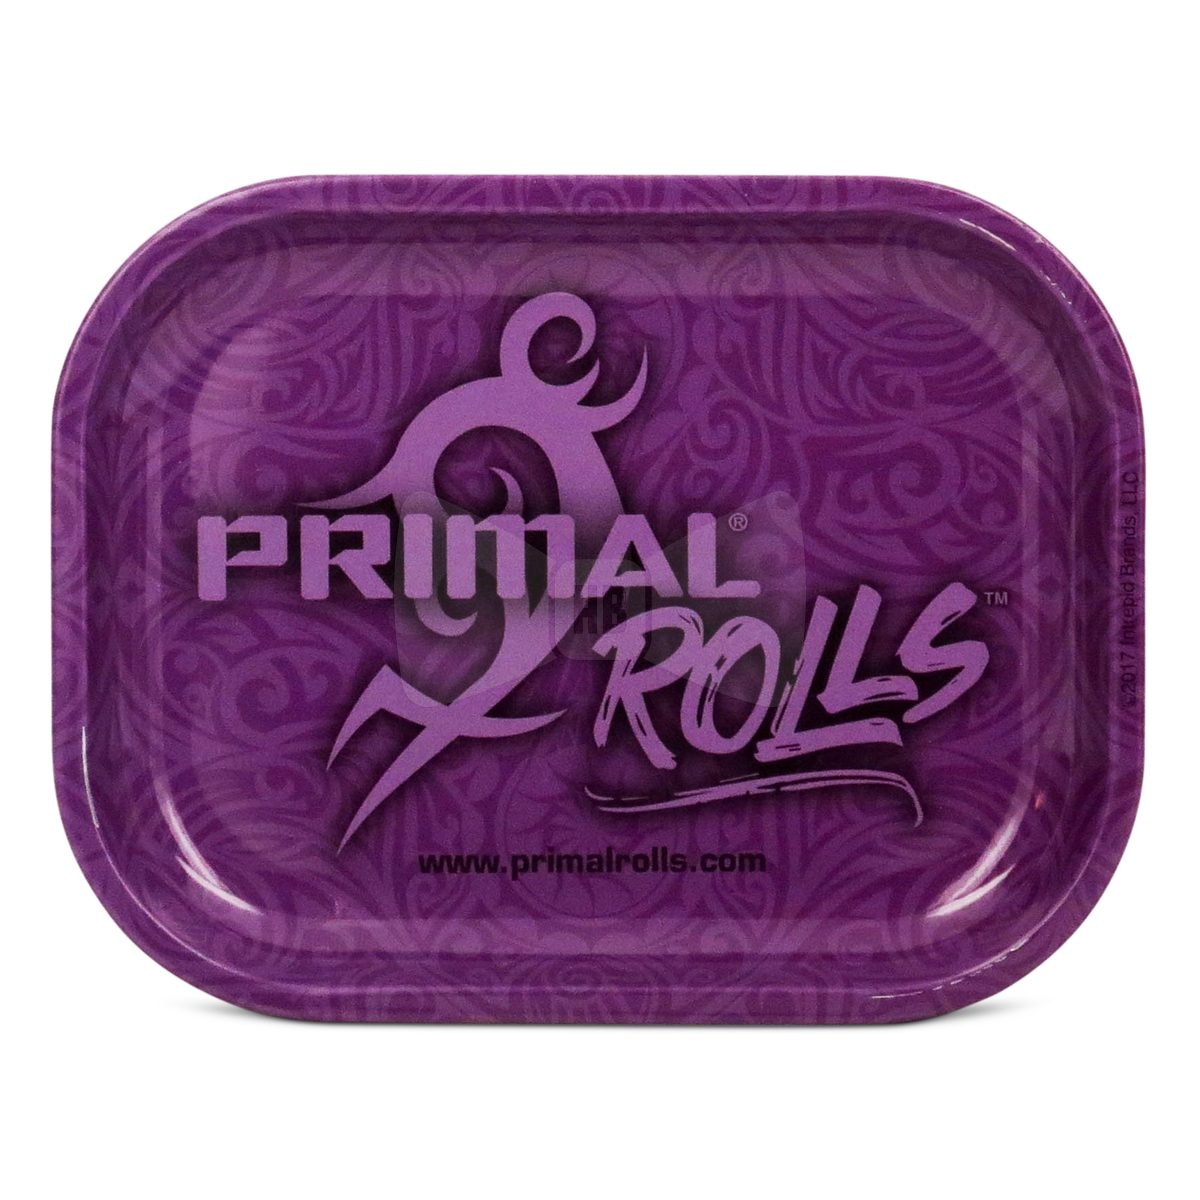 Primal Rolls Mini Rolling Tray